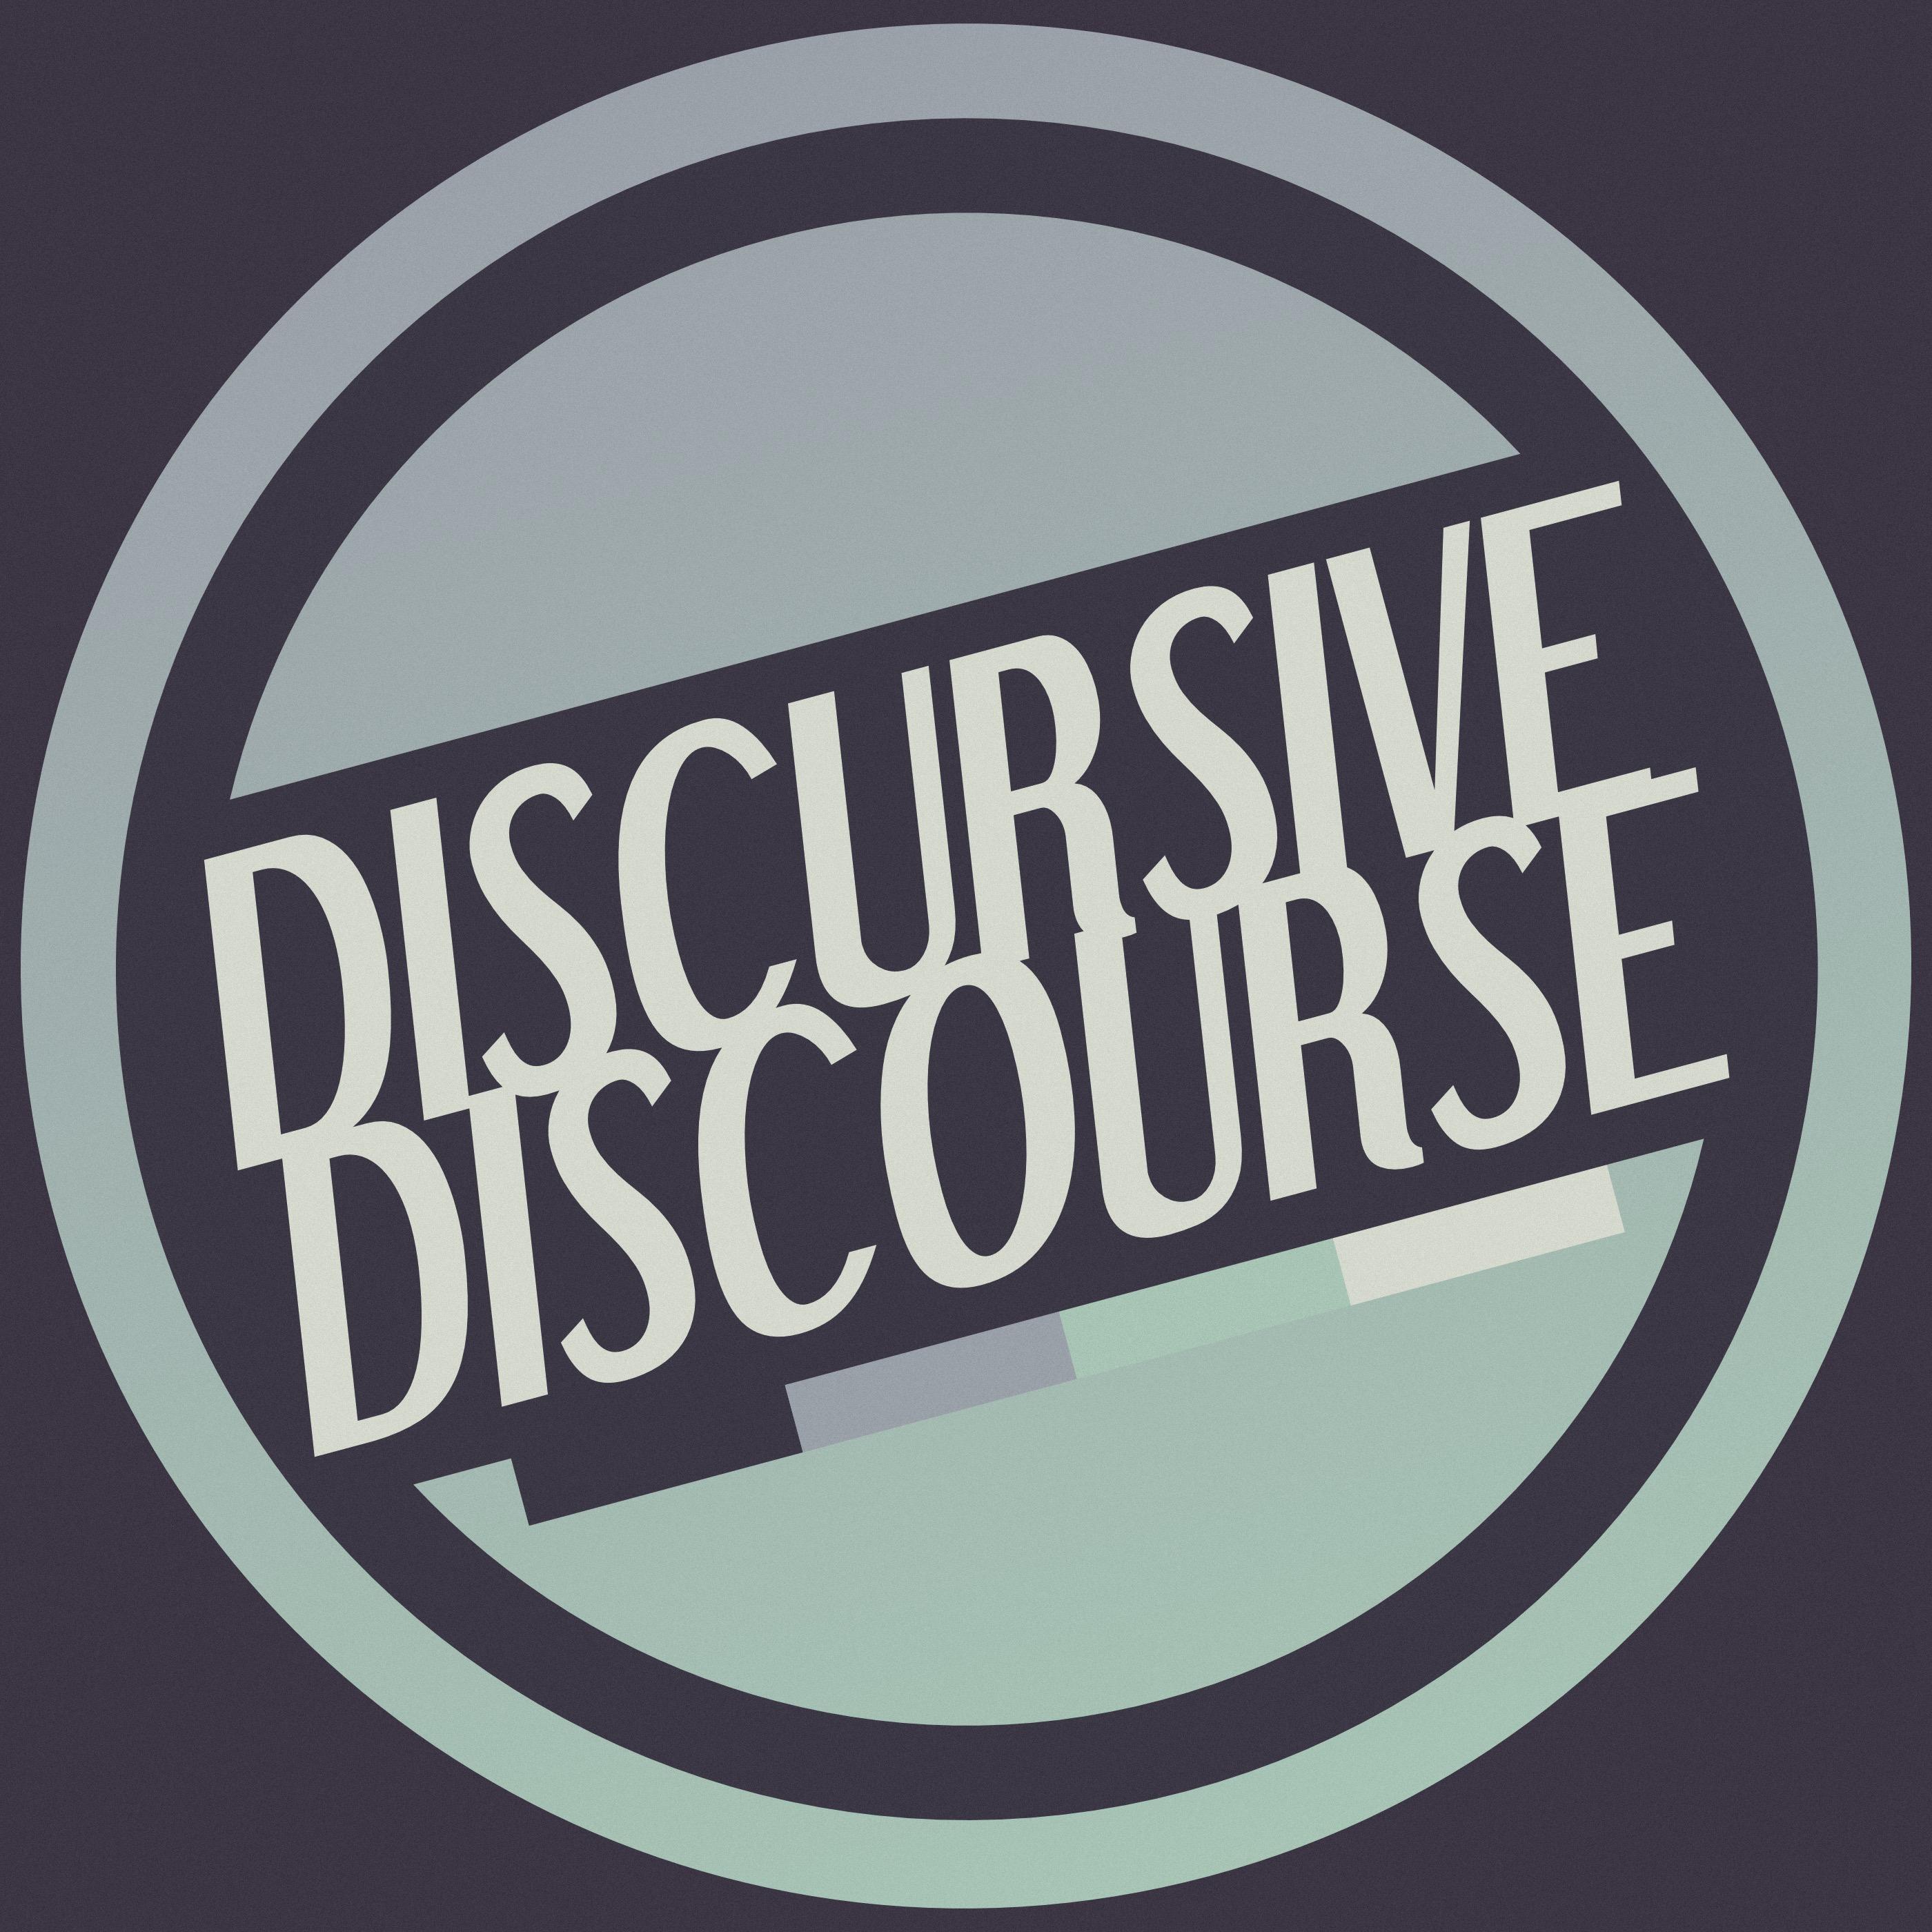 Discursive Discourse